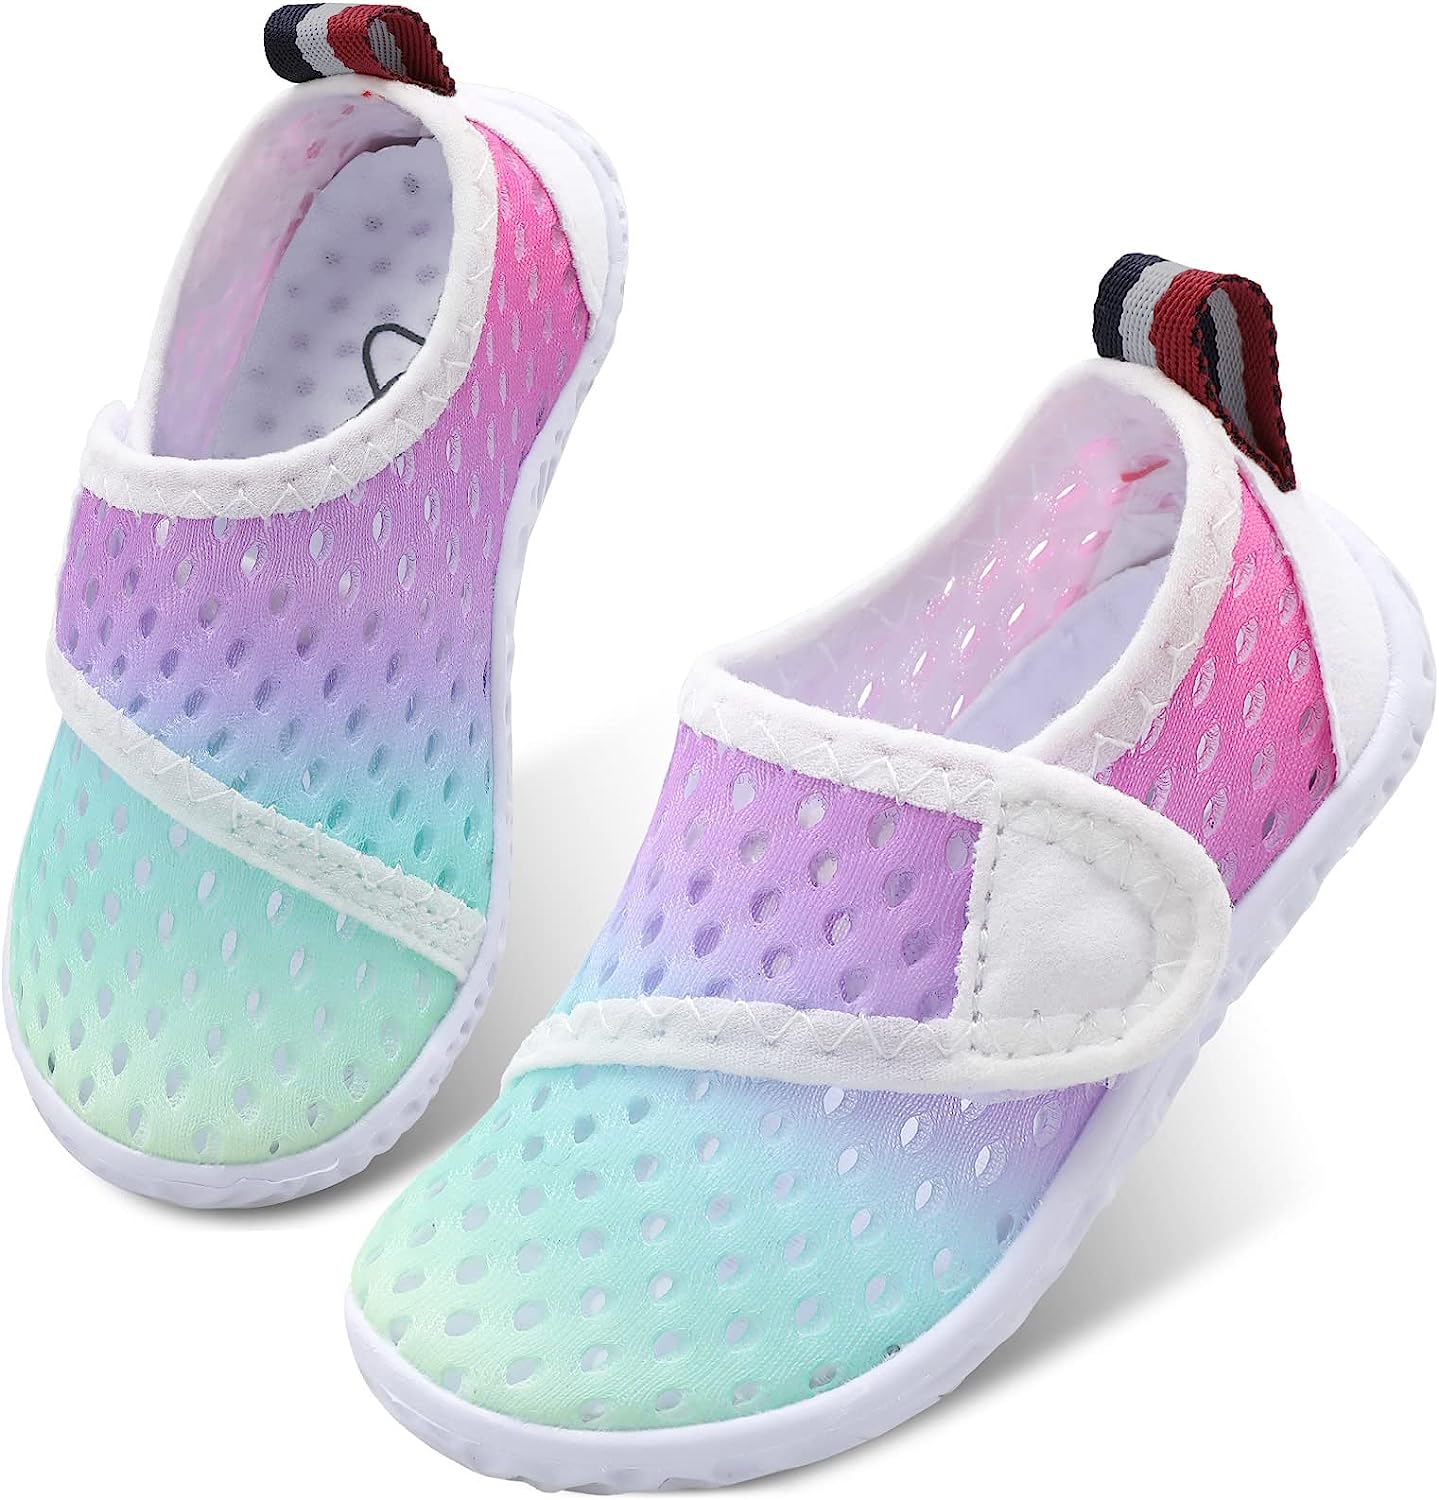 LeIsfIt Toddler Water Shoes Boys Girls Aqua Socks Kids [...]